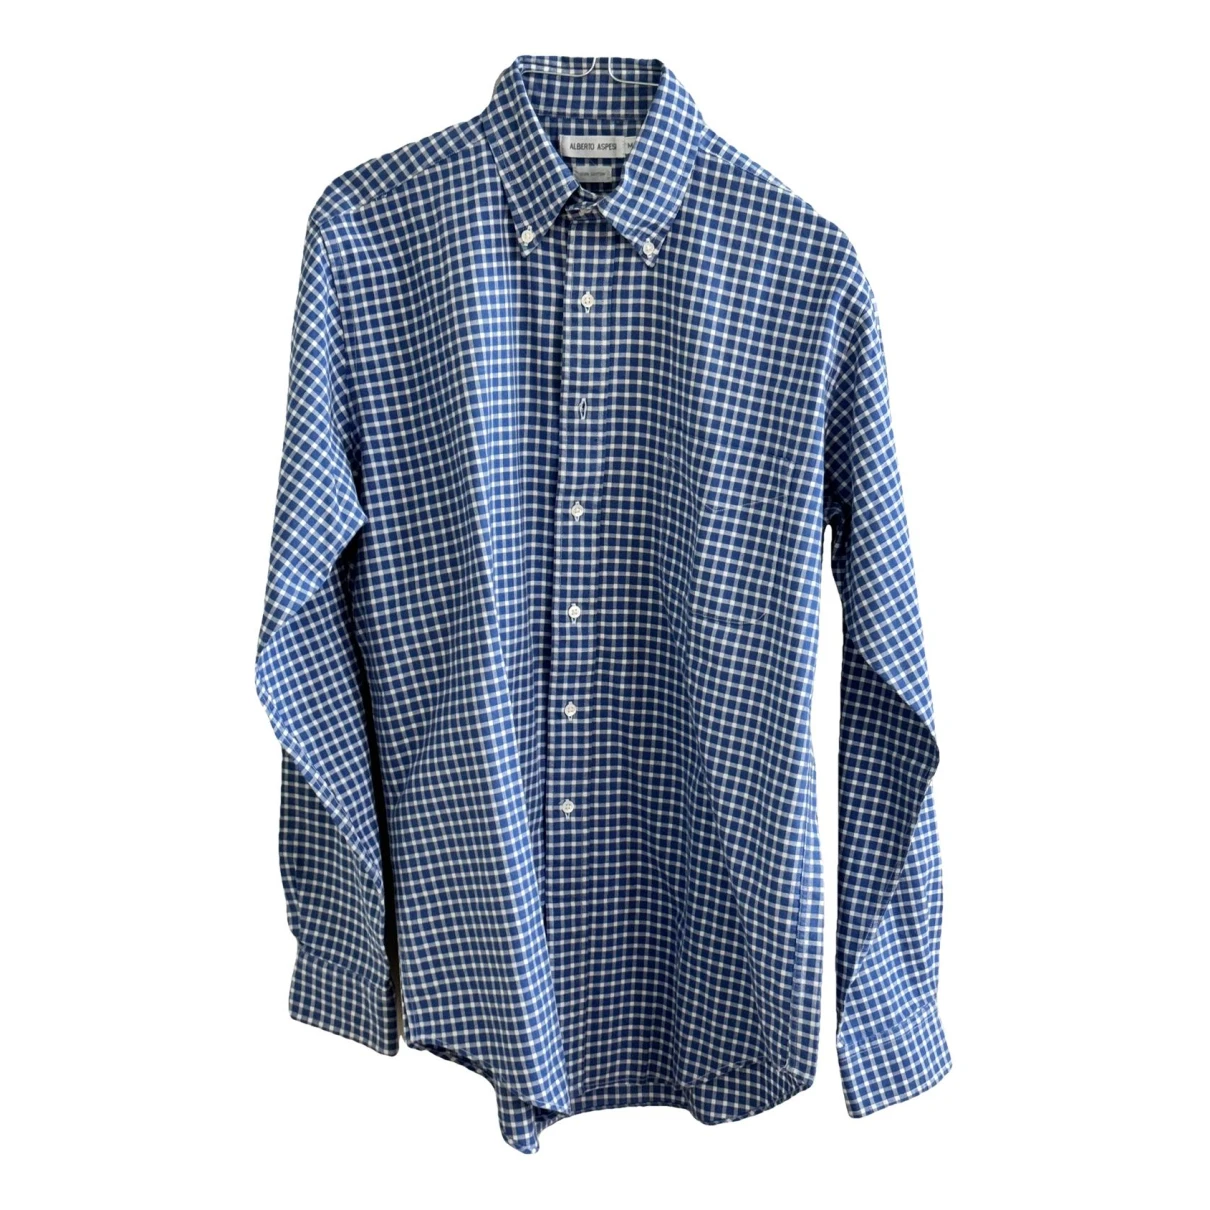 clothing Aspesi shirts for Male Cotton 40 EU (tour de cou / collar). Used condition